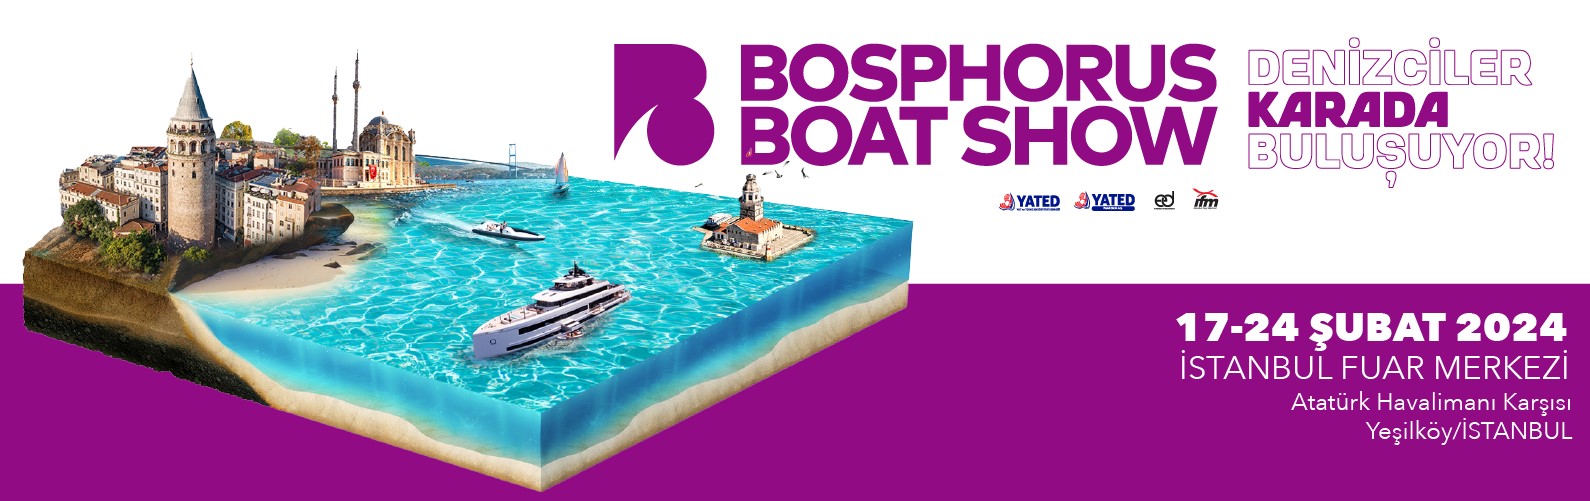 Bosphorus Boat Show